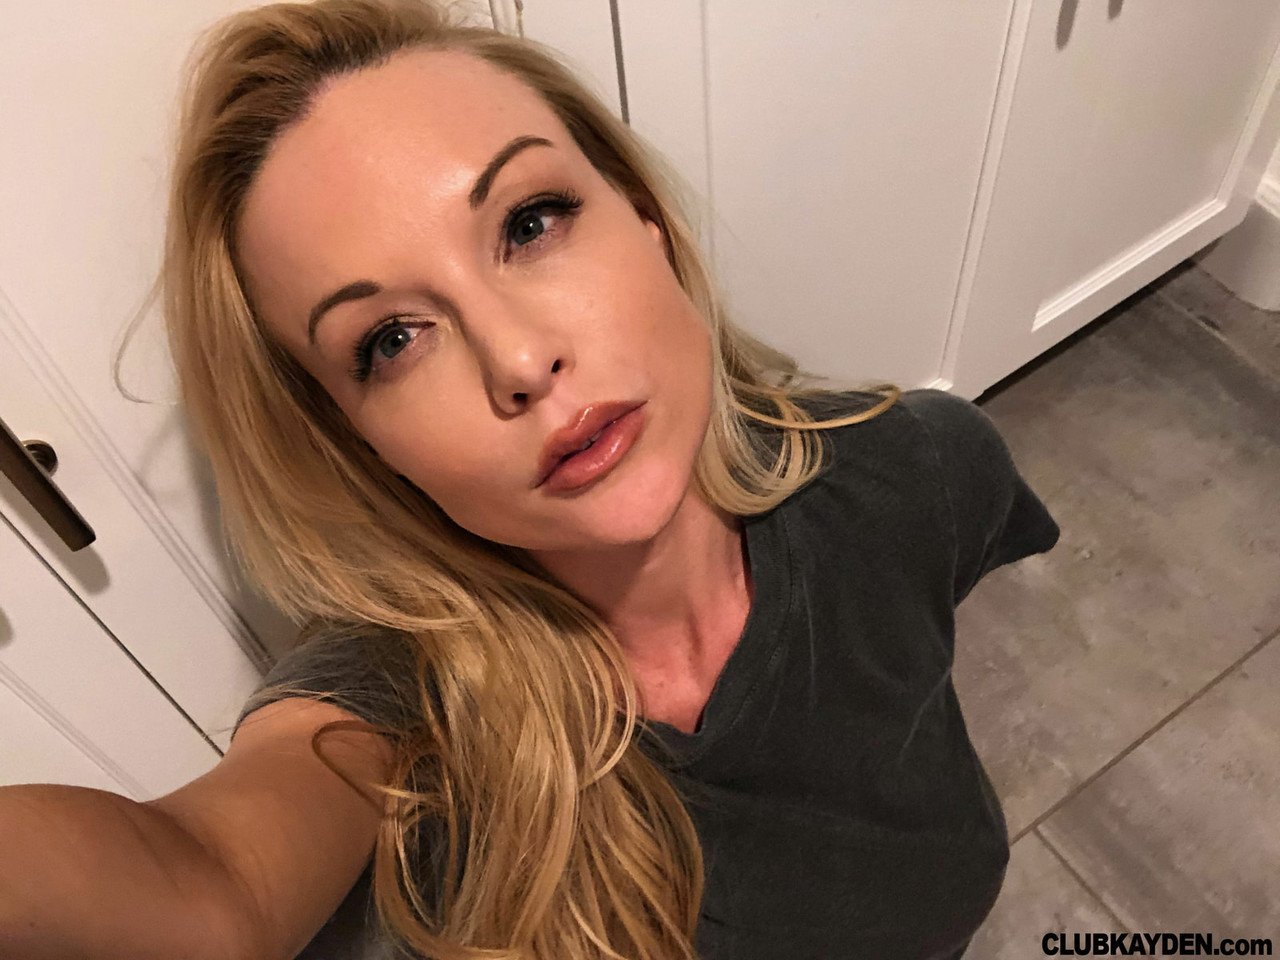 Hot blond Kayden Kross sports long nipples while taking masturbation selfies ポルノ写真 #422676185